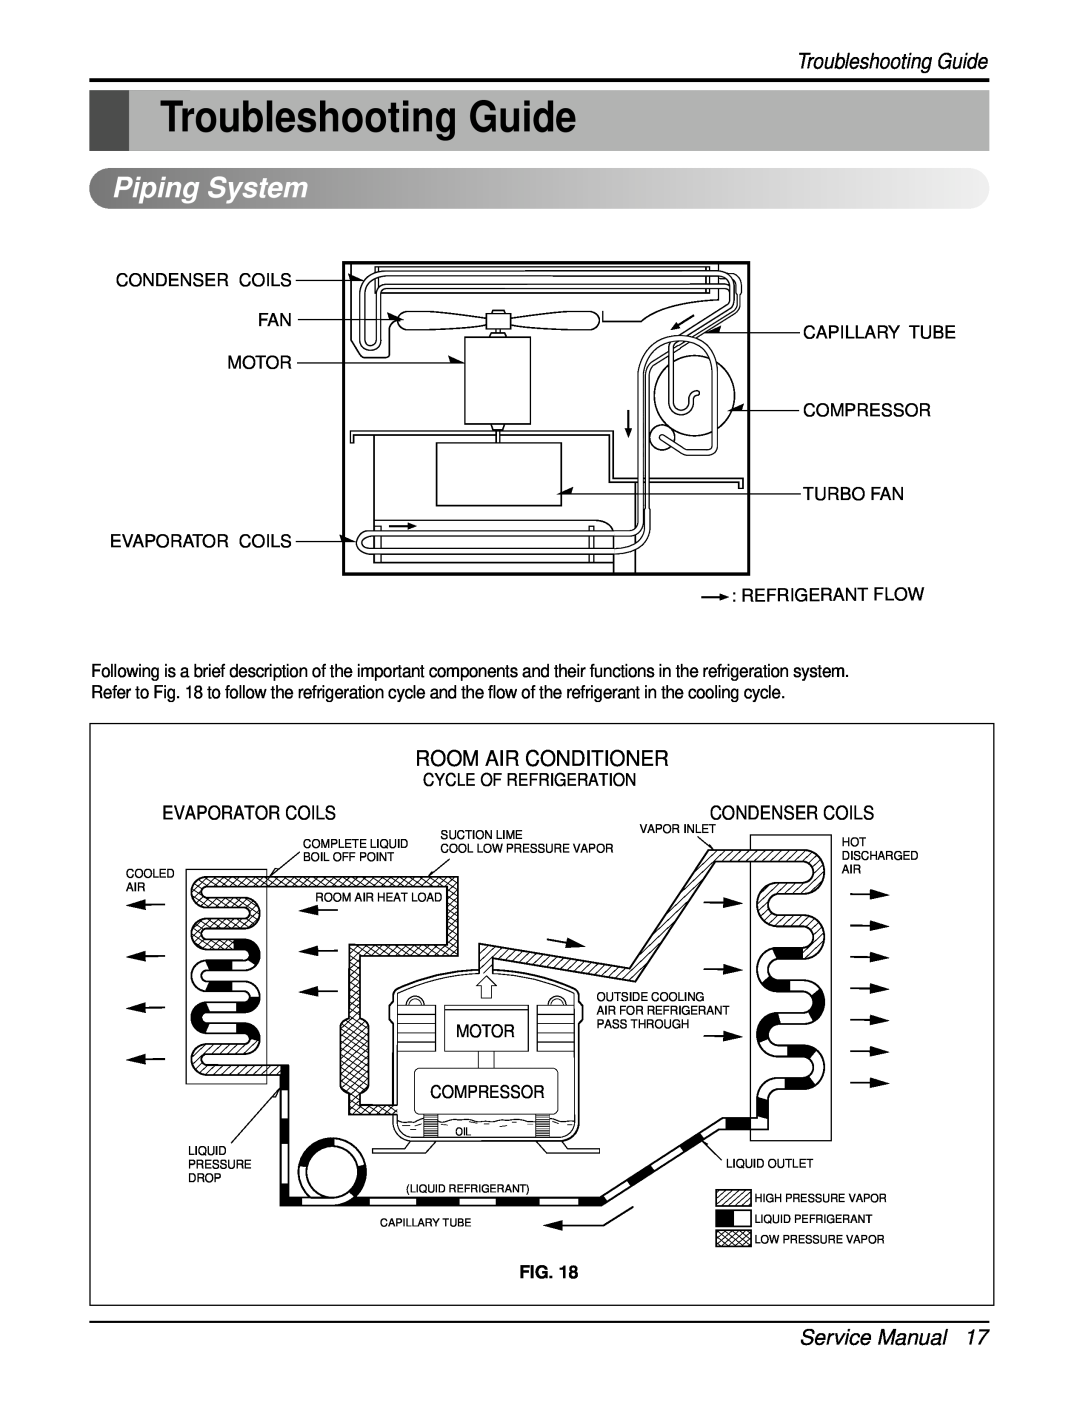 Friedrich UE08C13, UE12C33 manual Troubleshooting Guide, Piping System, Evaporator Coils, Condenser Coils, Motor, Compressor 